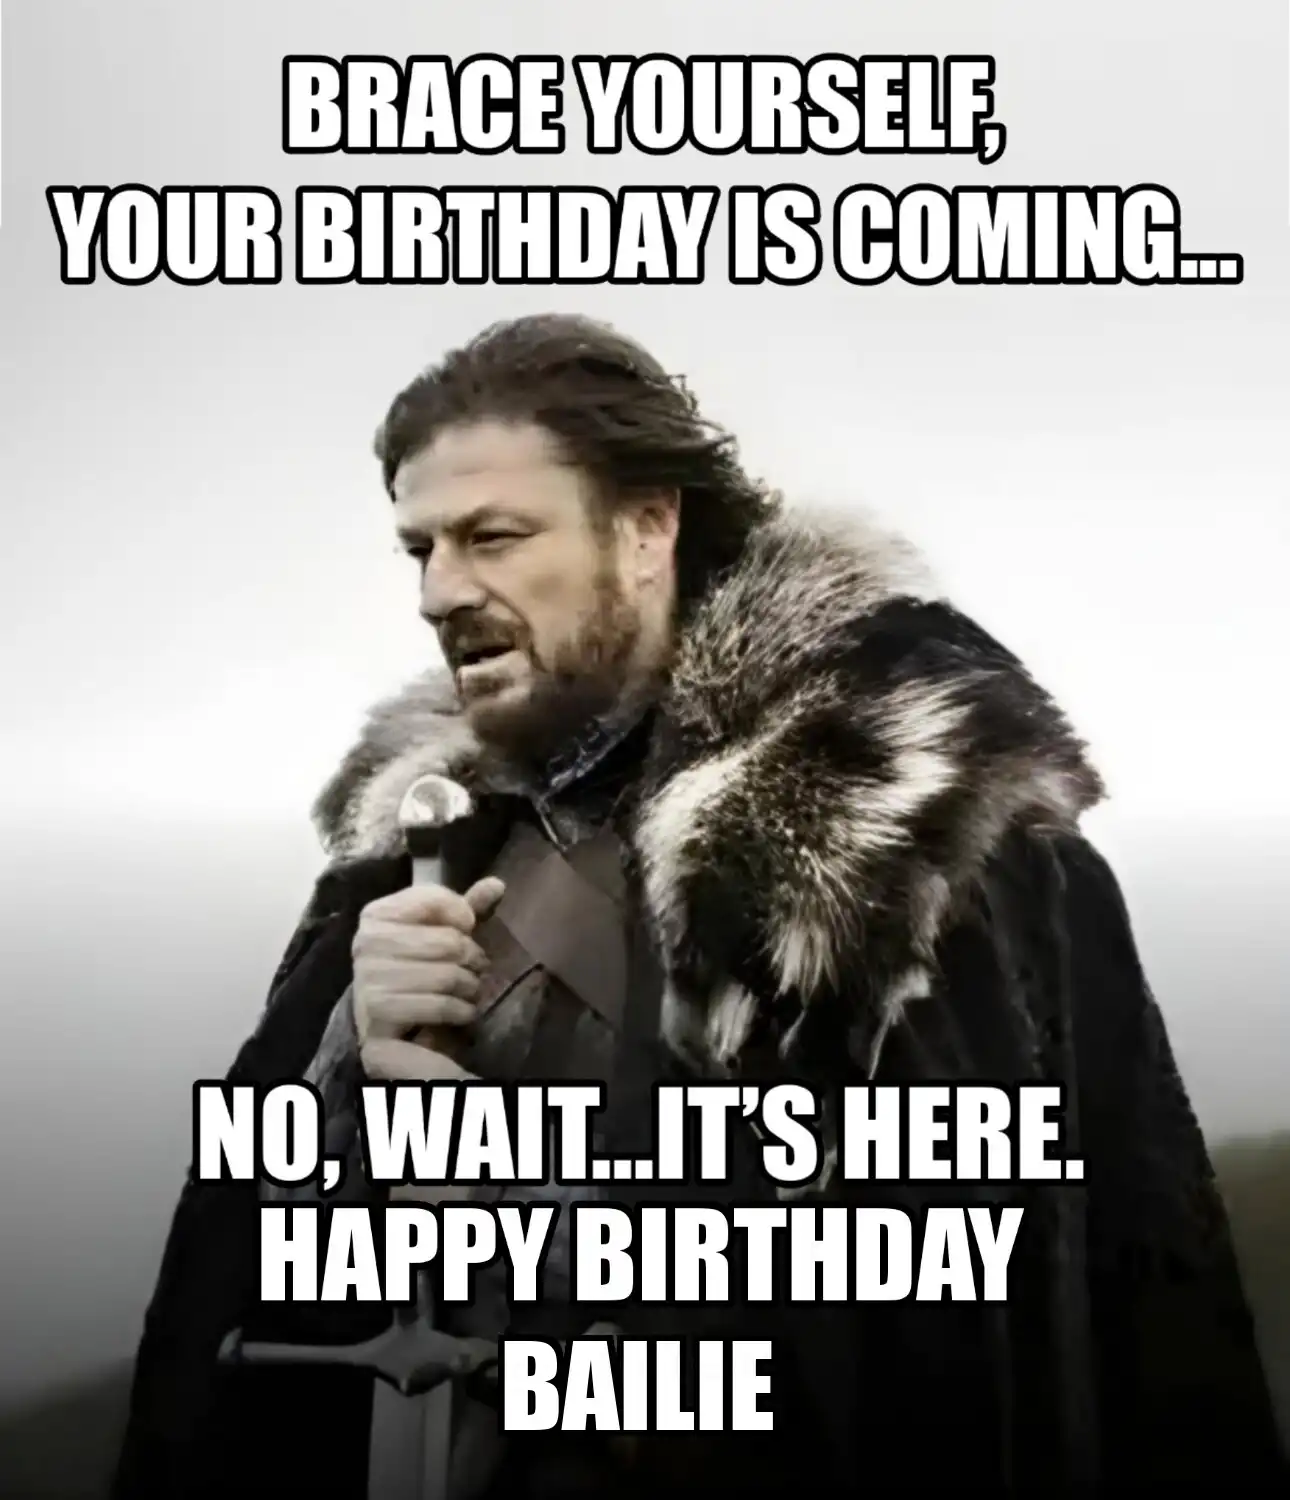 Happy Birthday Bailie Brace Yourself Your Birthday Is Coming Meme